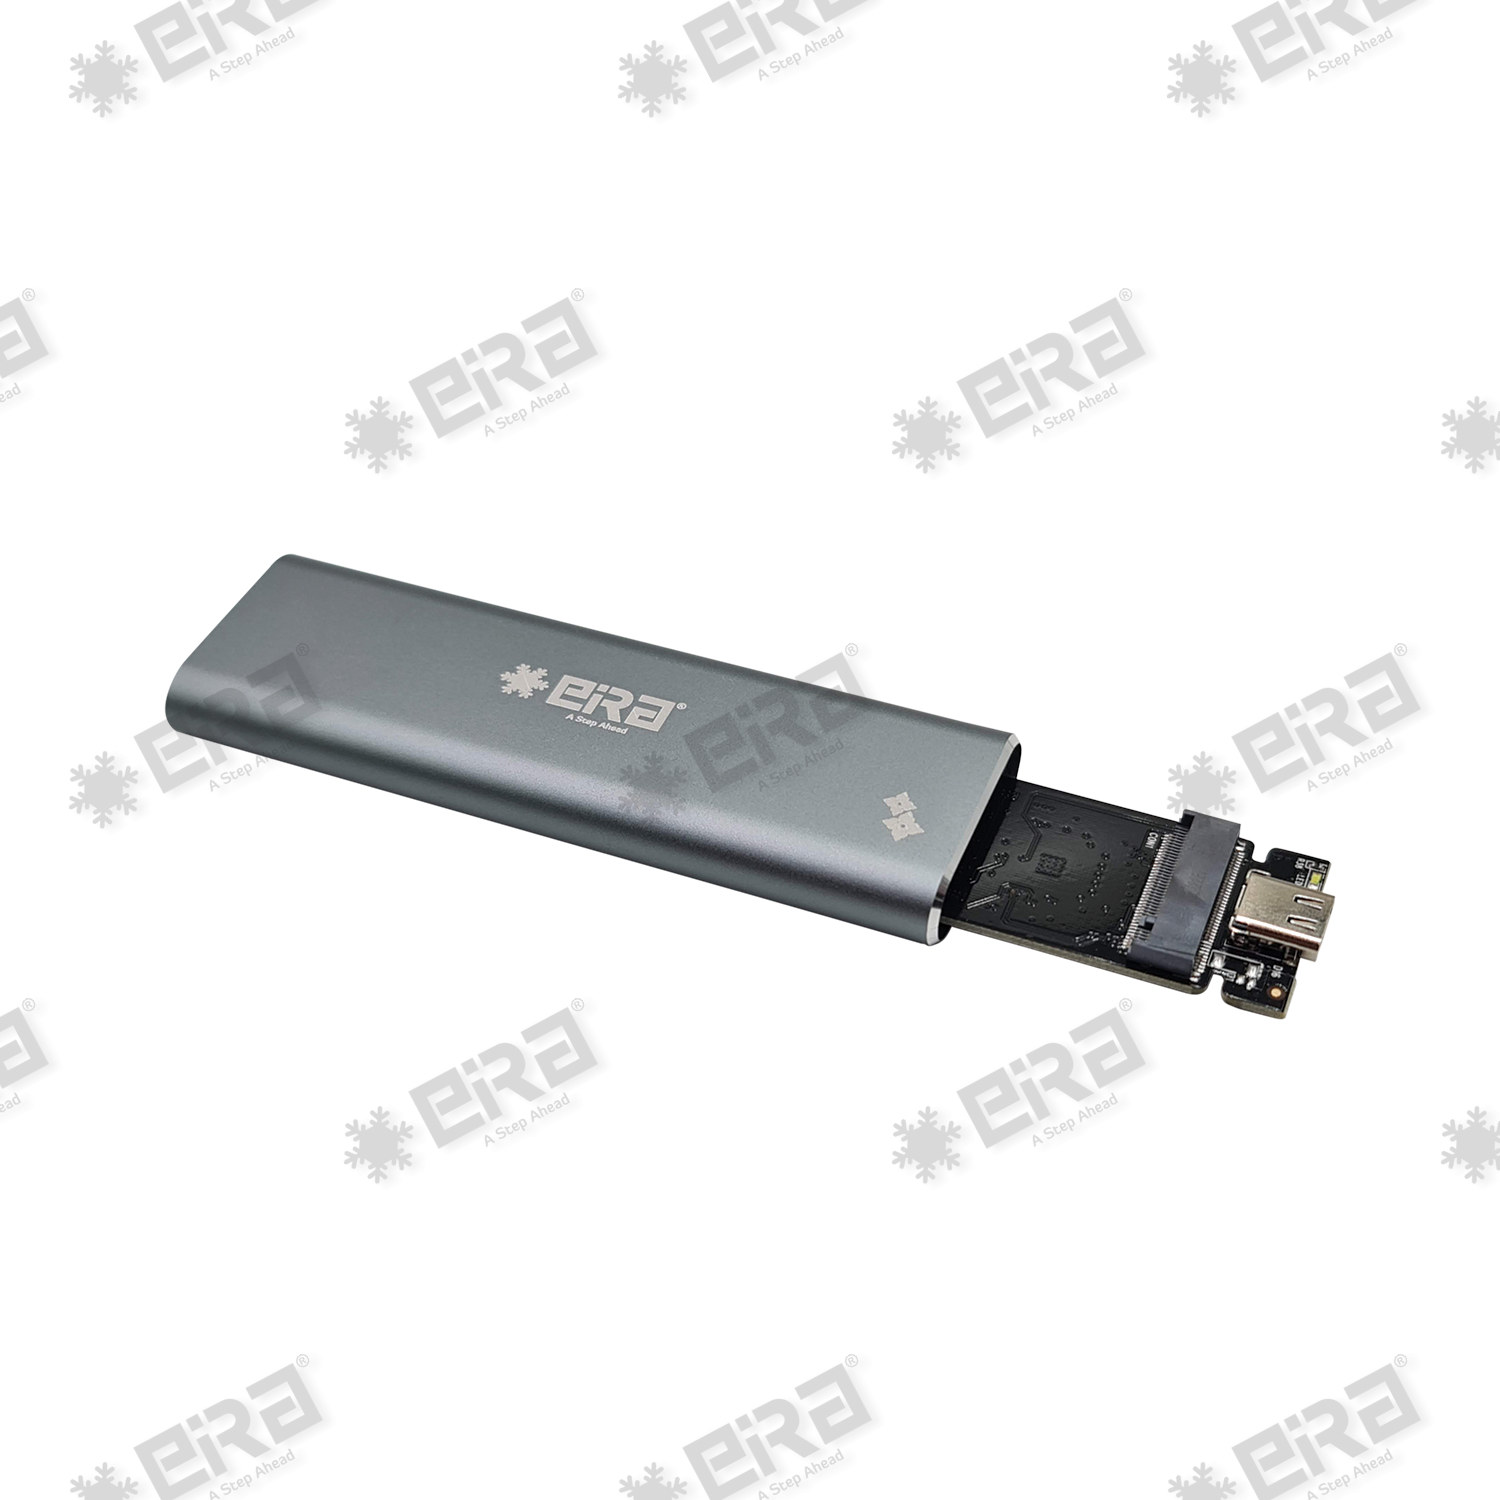 M.2 PCIe NVMe Mini SSD Casing 2280 (USB3.1 Type-C Gen 2)